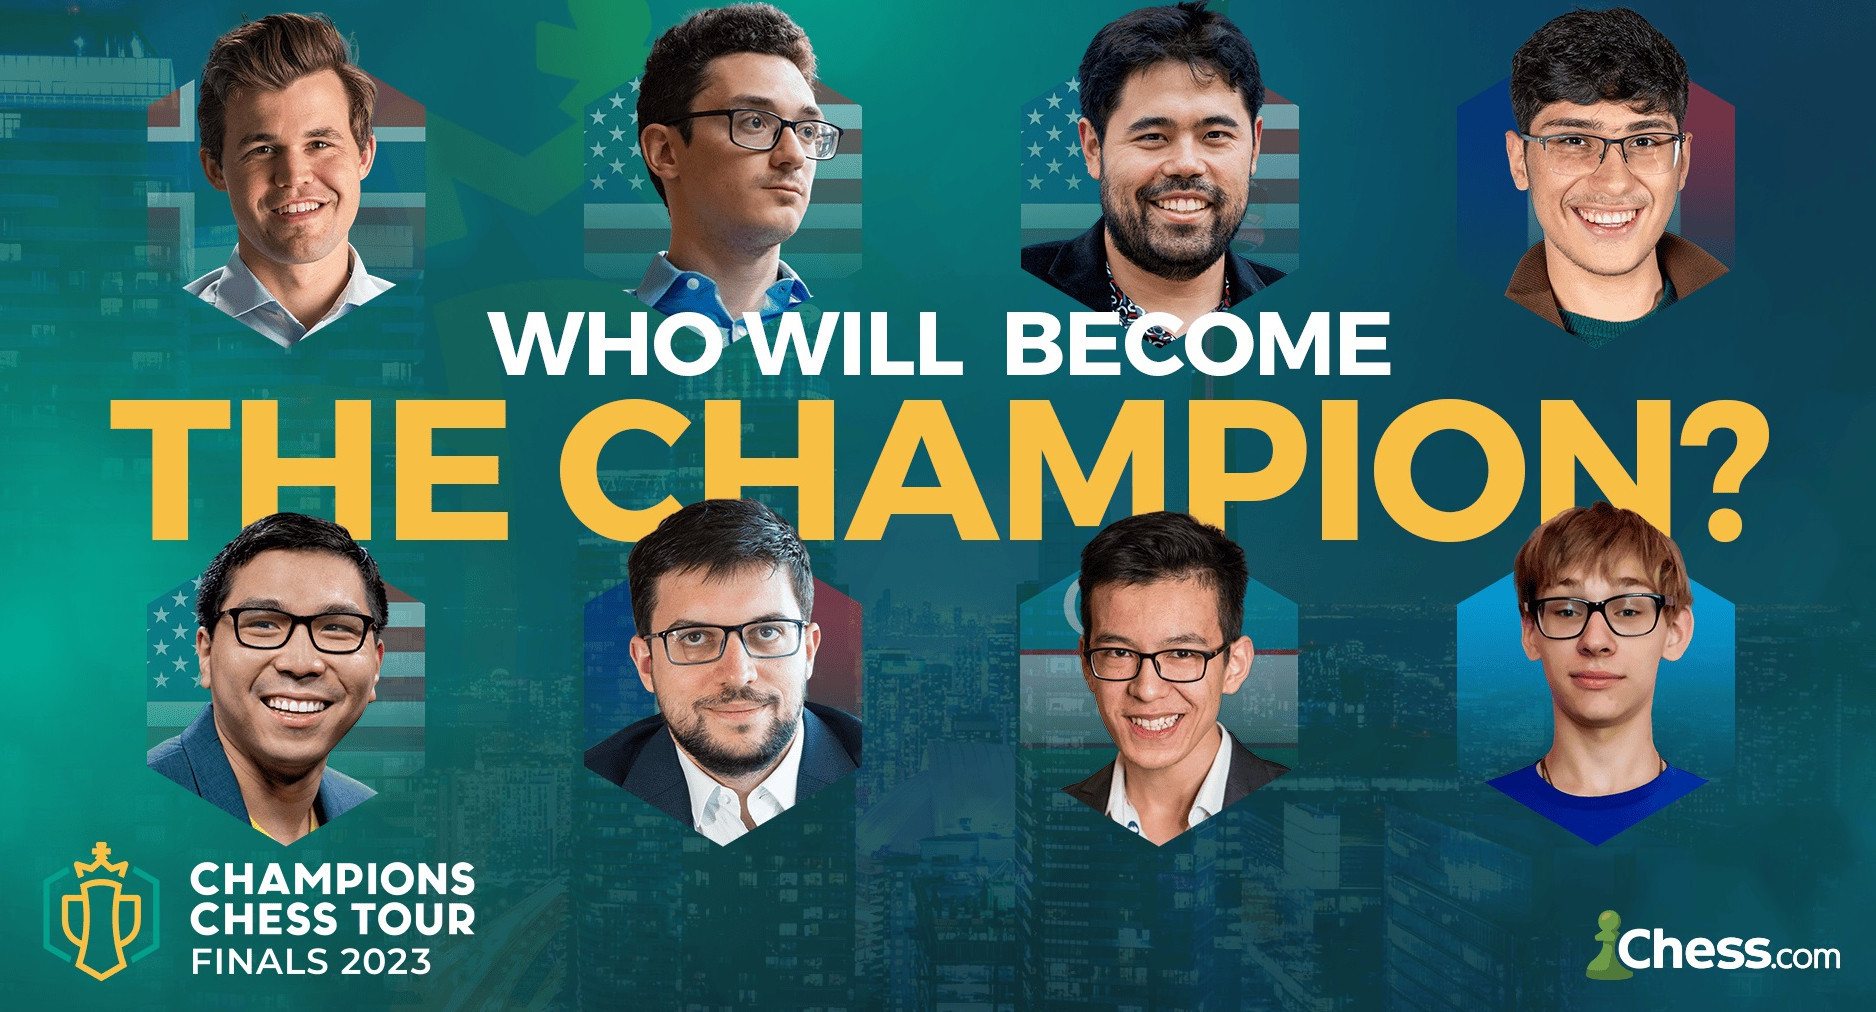 Champions Chess Tour Finals - Live!